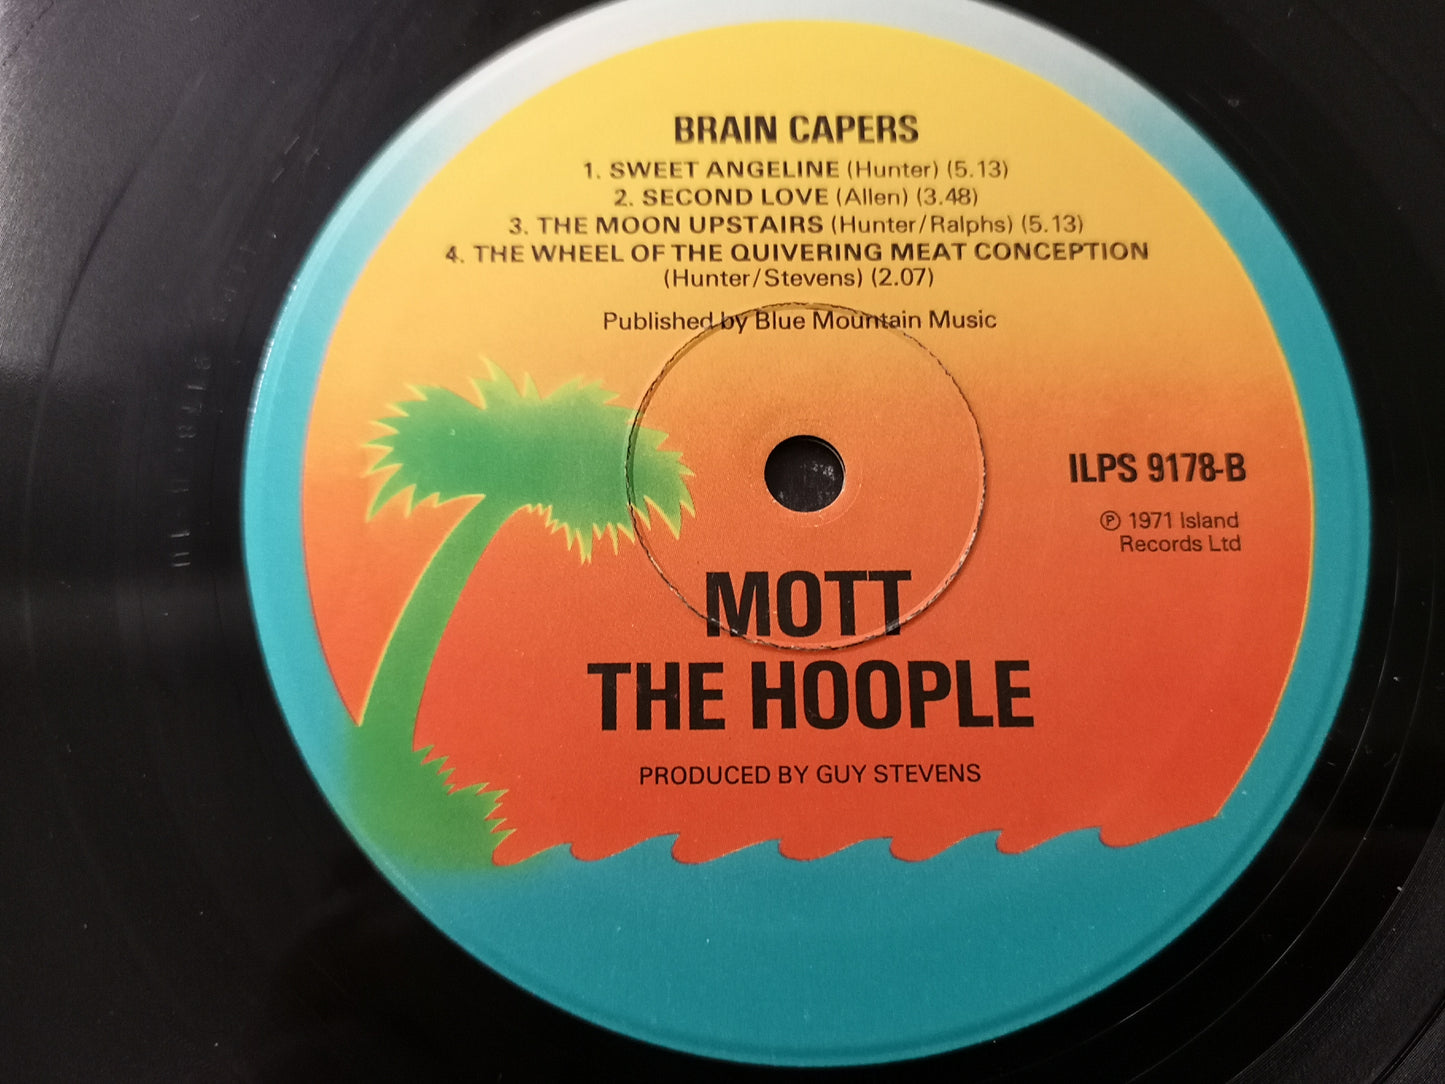 Mott the Hoople "Brain Capers" Re Uk 1971/76 Vg+/Vg+